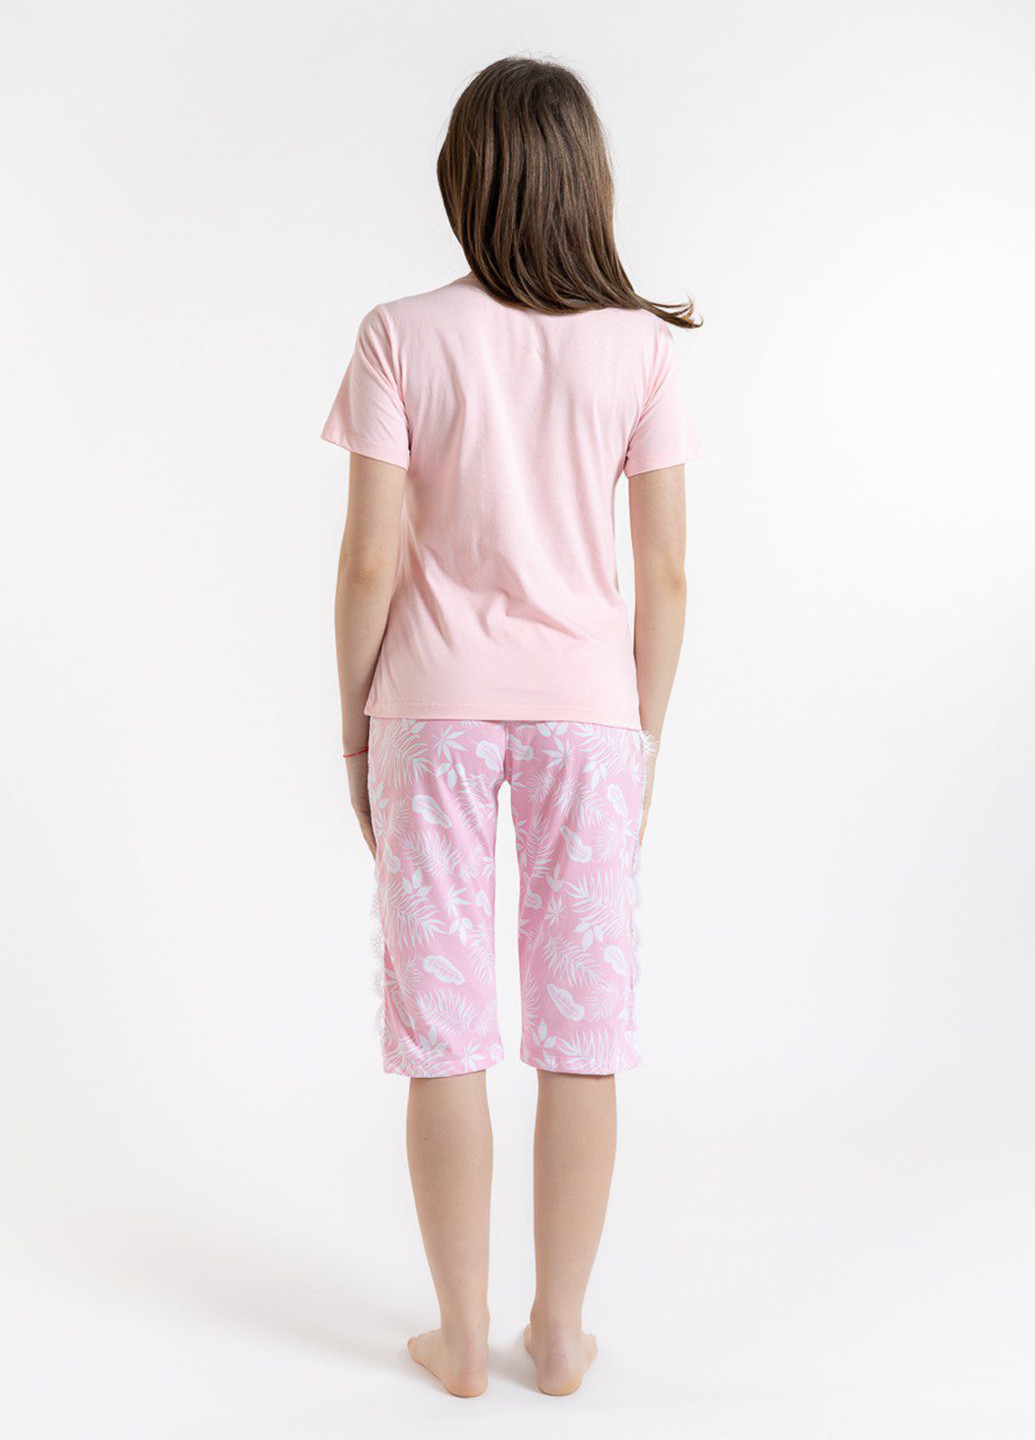 Розовая всесезон пижама (футболка, бриджи) футболка + бриджи BBL